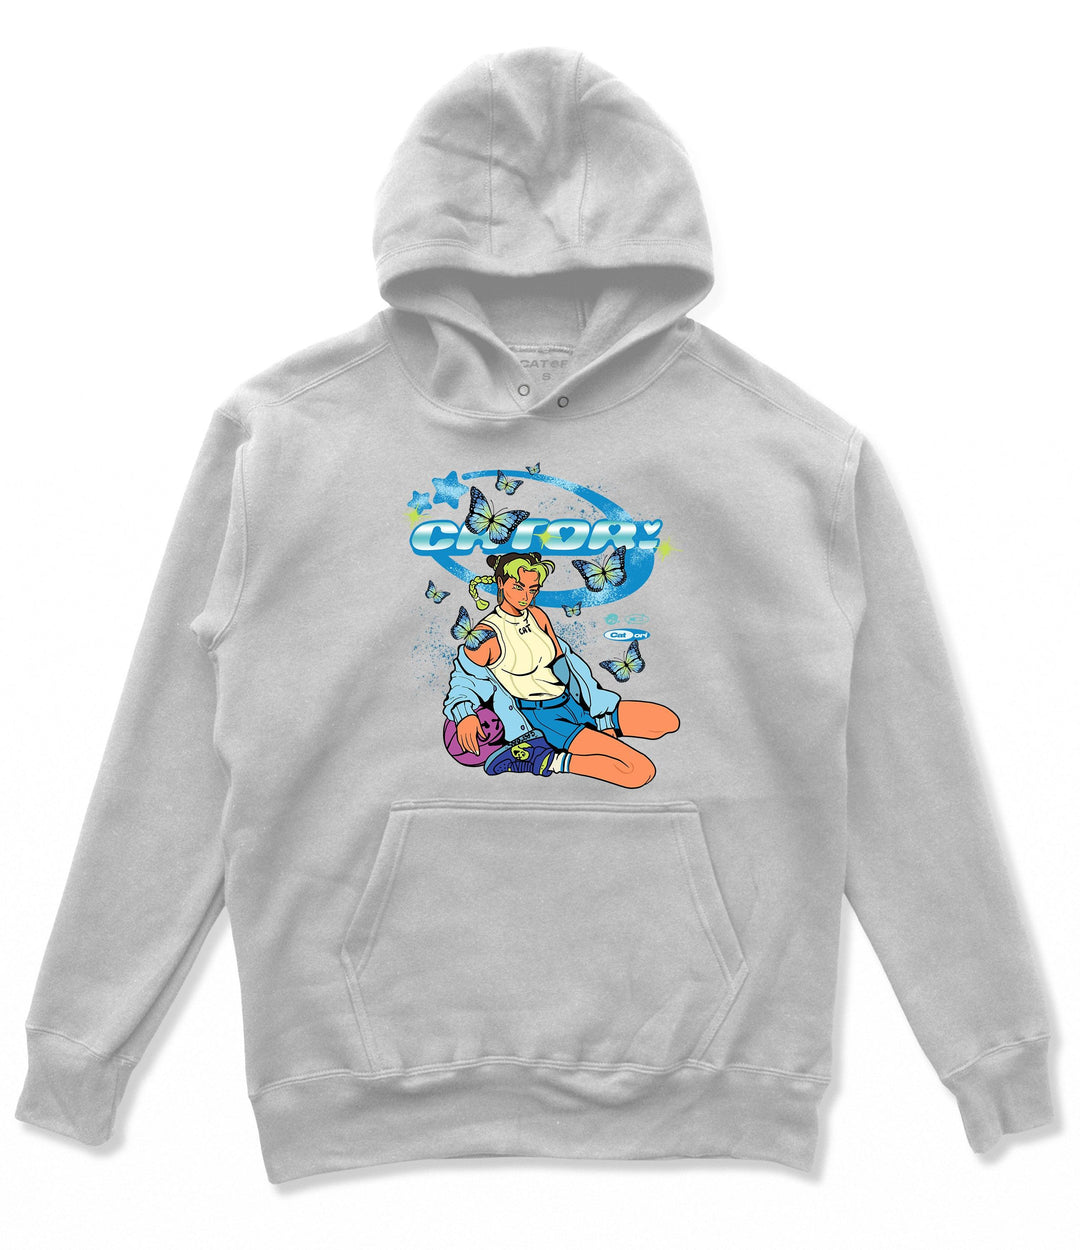 Butterfly Hoodie at Catori Clothing | Graphic & Anime Tees, Hoodies & Sweatshirts 